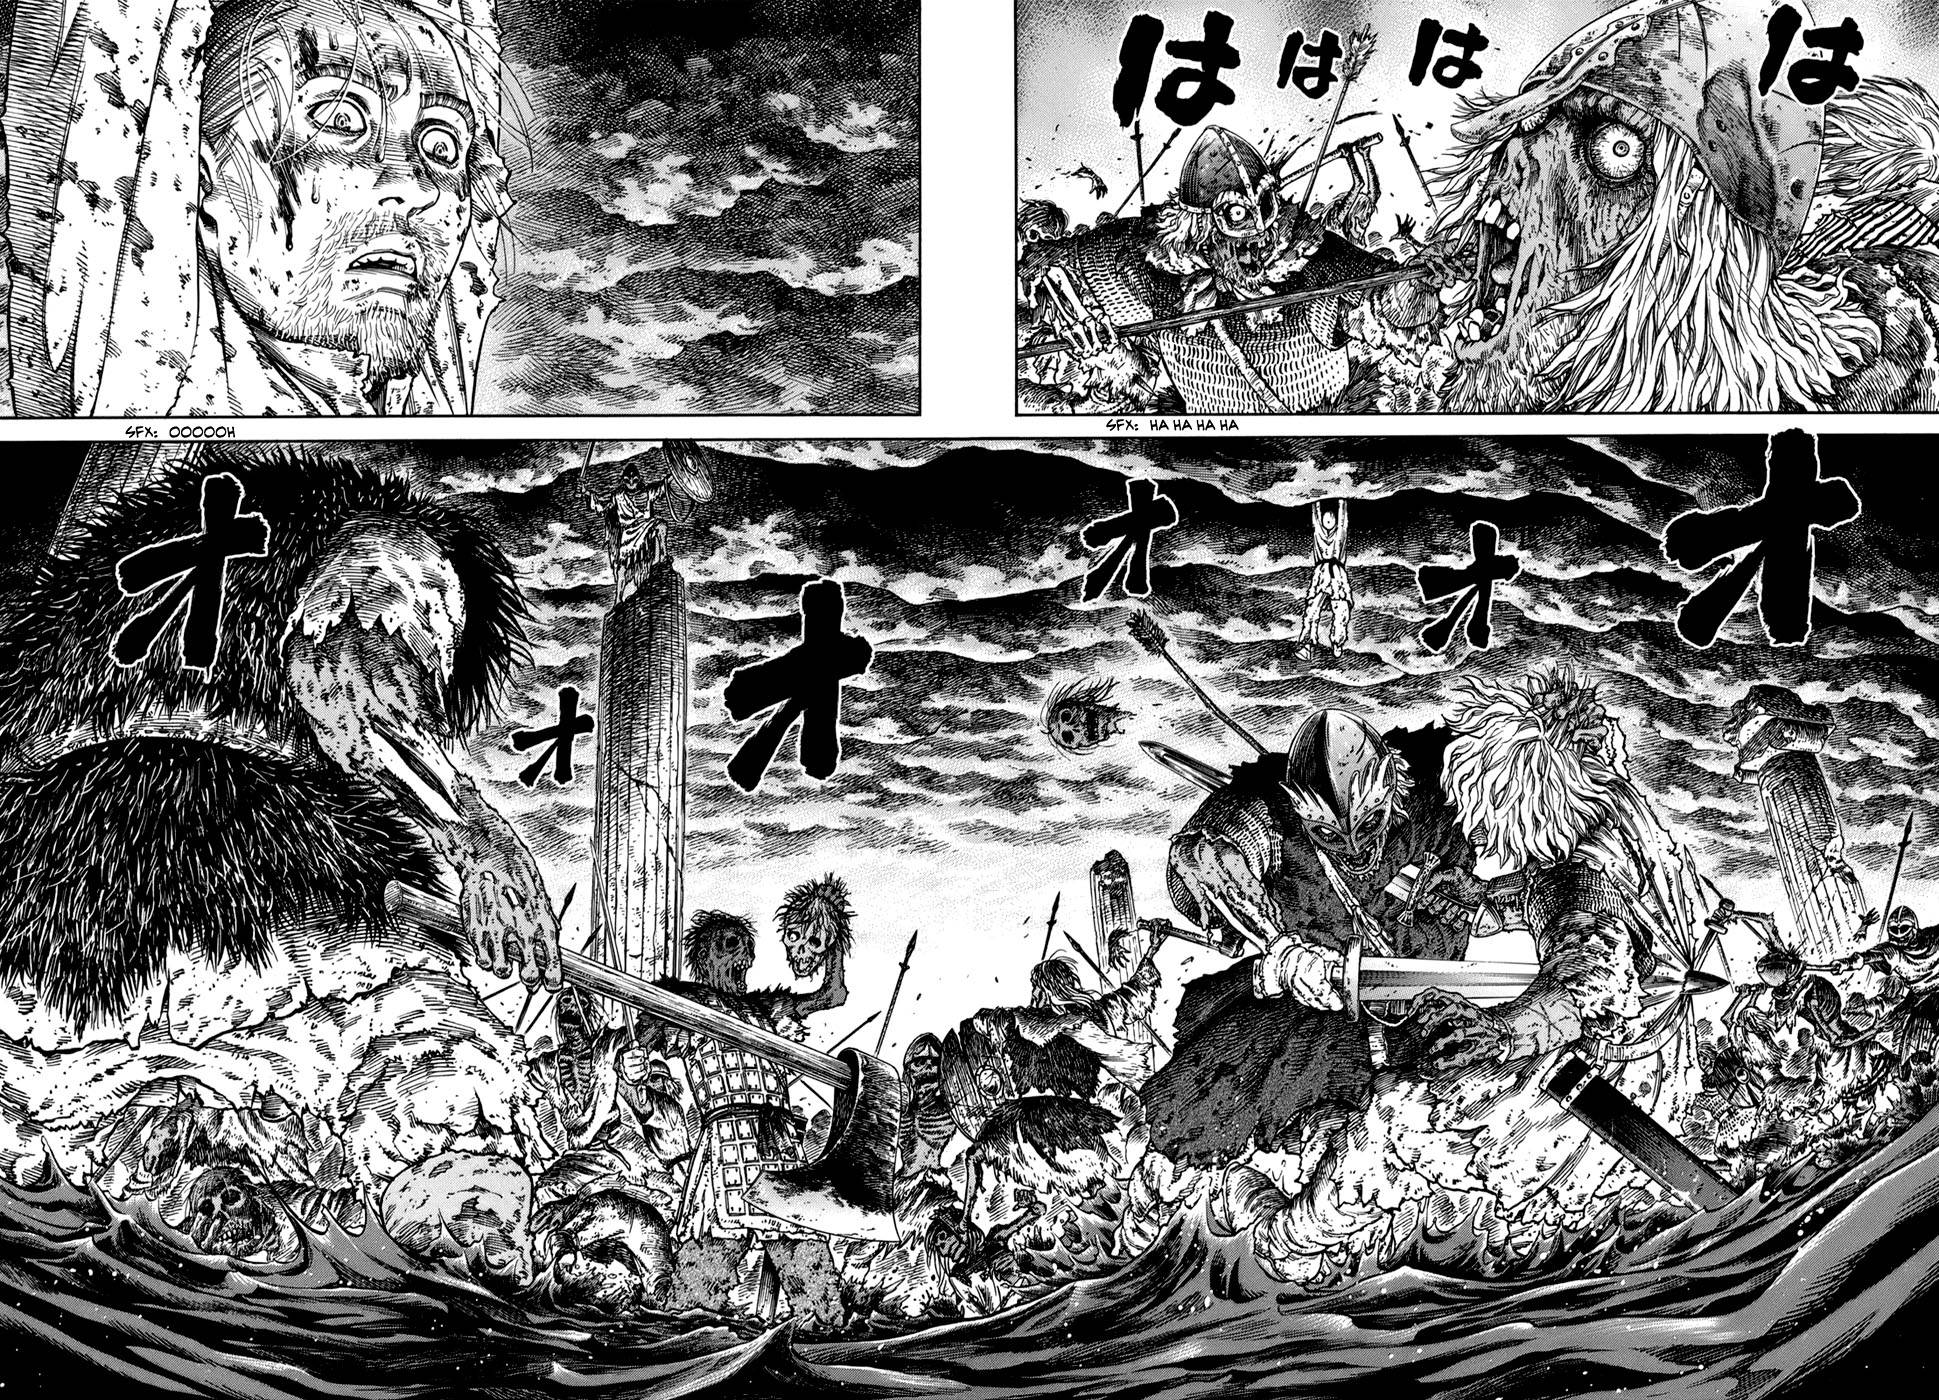 daily underground manga panel on X: VINLAND SAGA SEASON 2 WAS